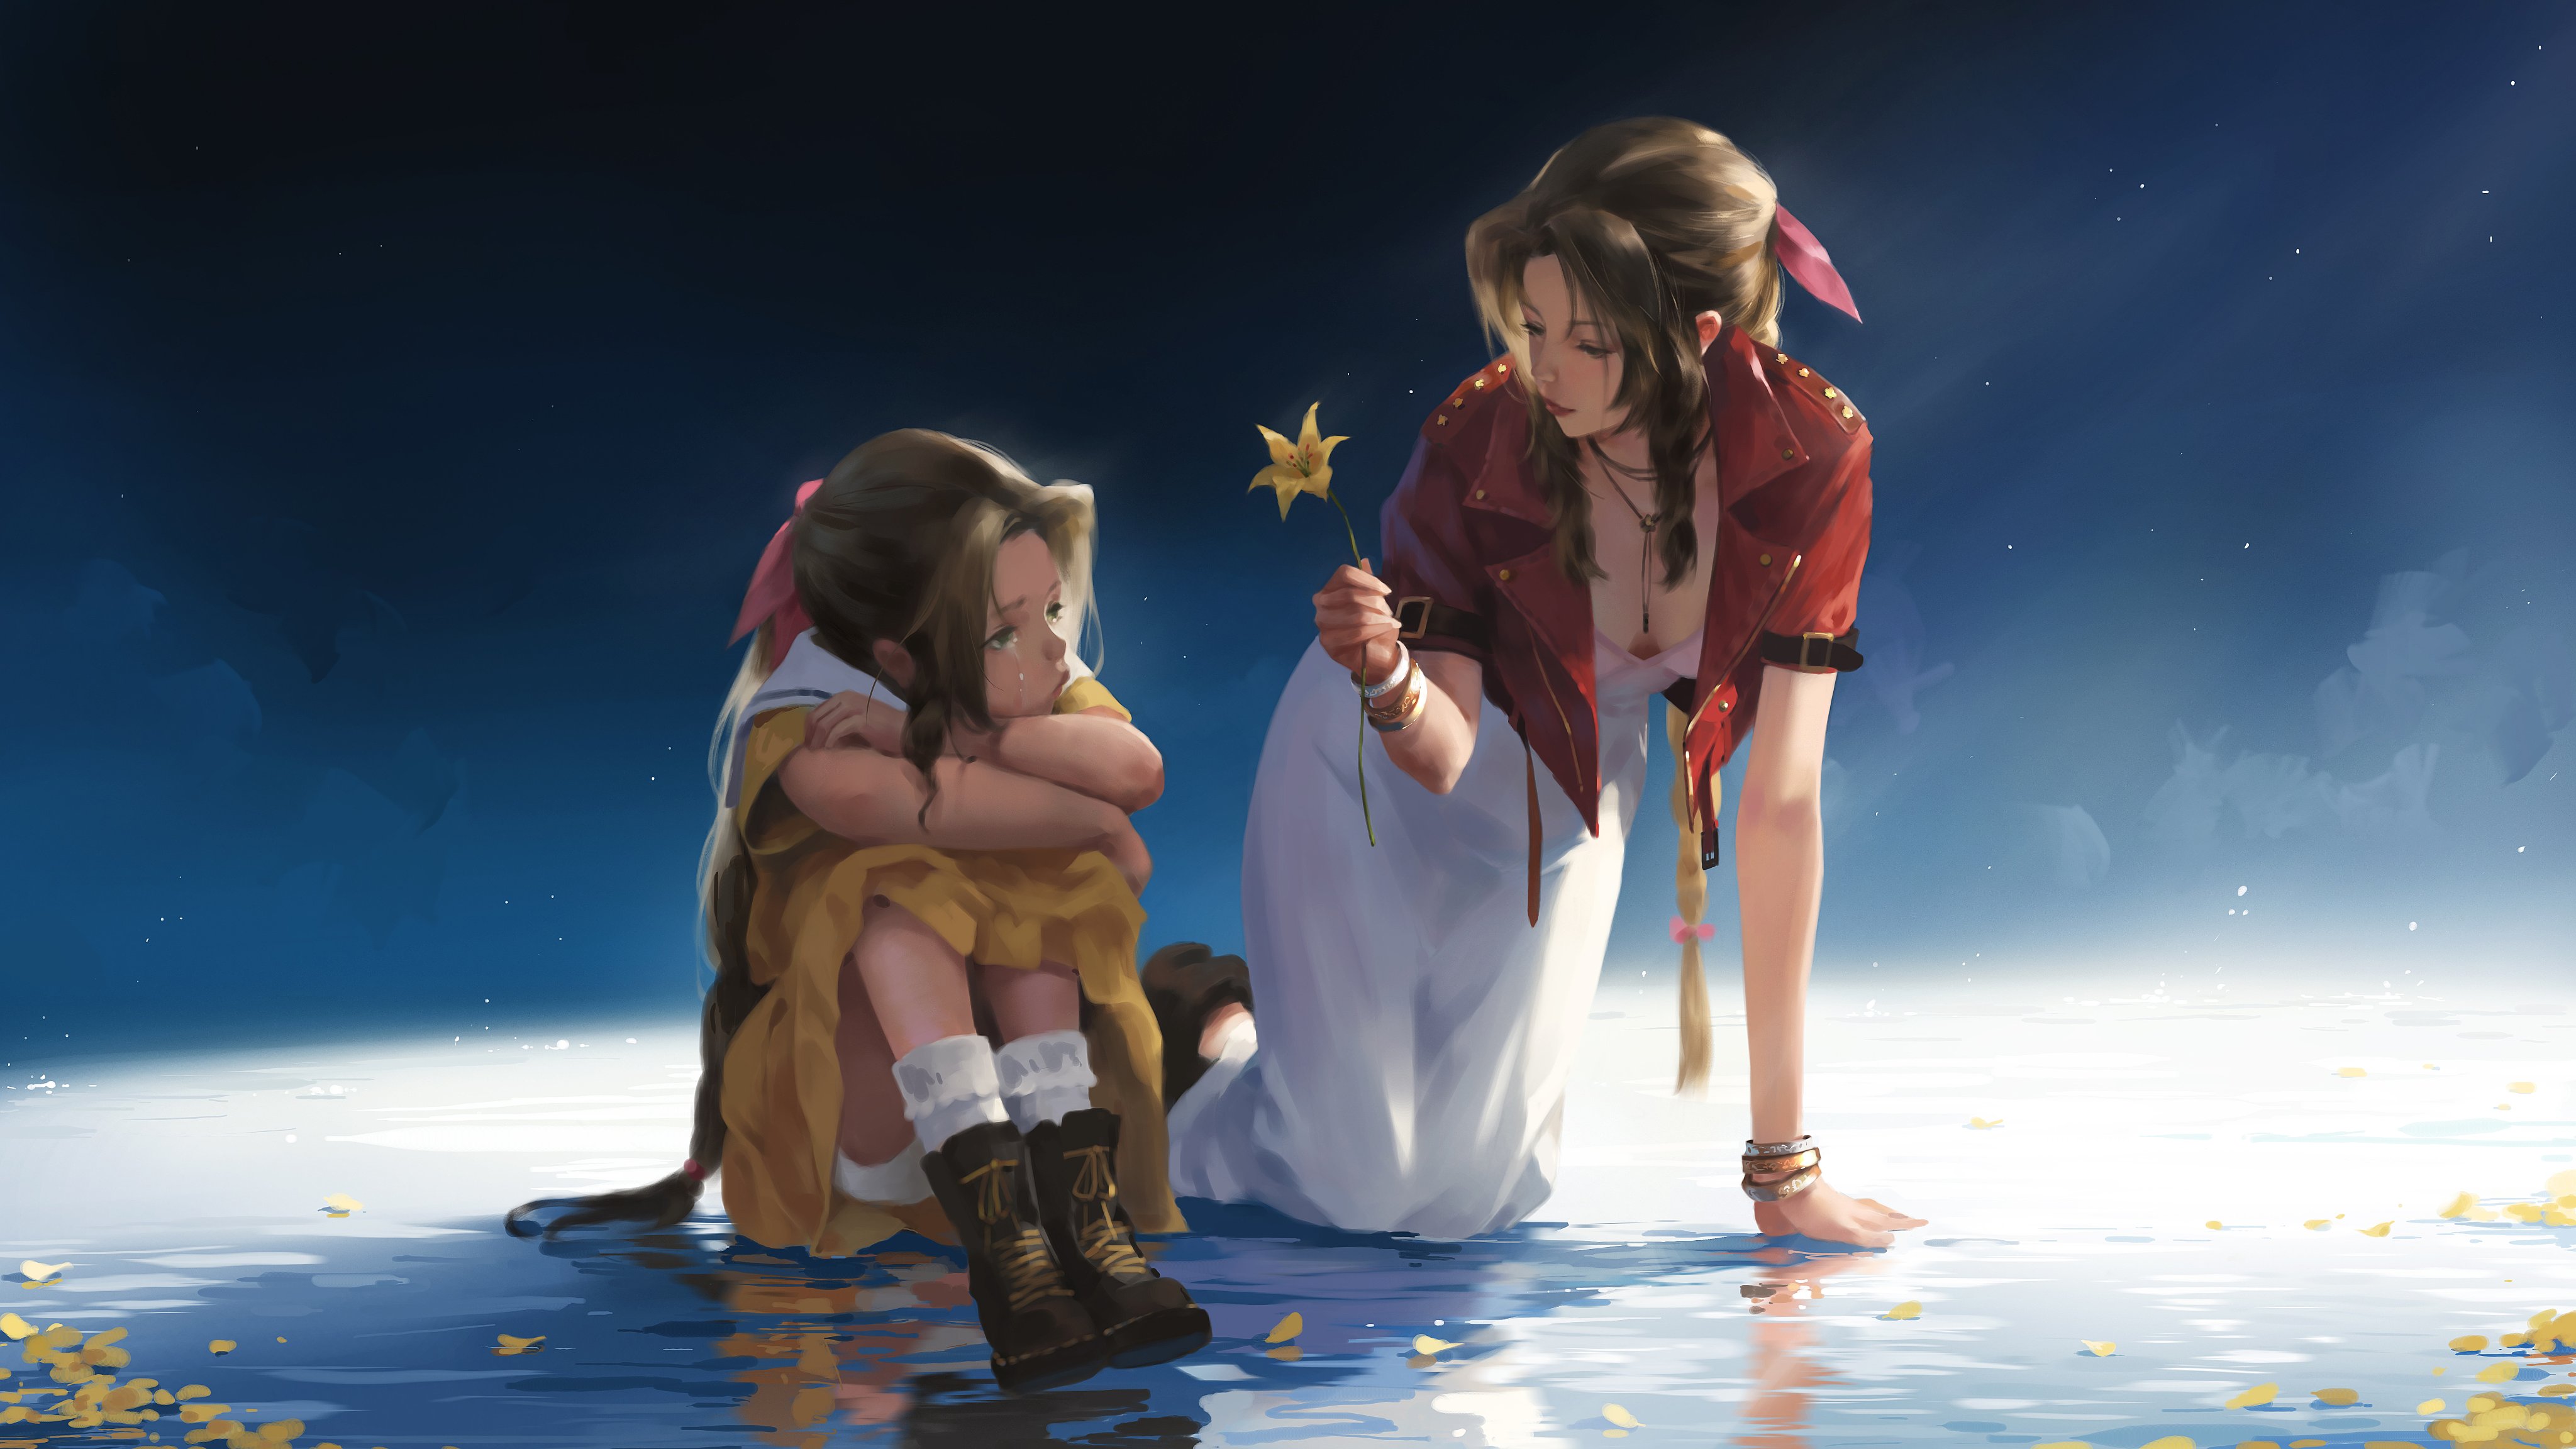 Taejune Kim Final Fantasy Square Enix Aerith Gainsborough Final Fantasy Vii Digital Art 4096x2304